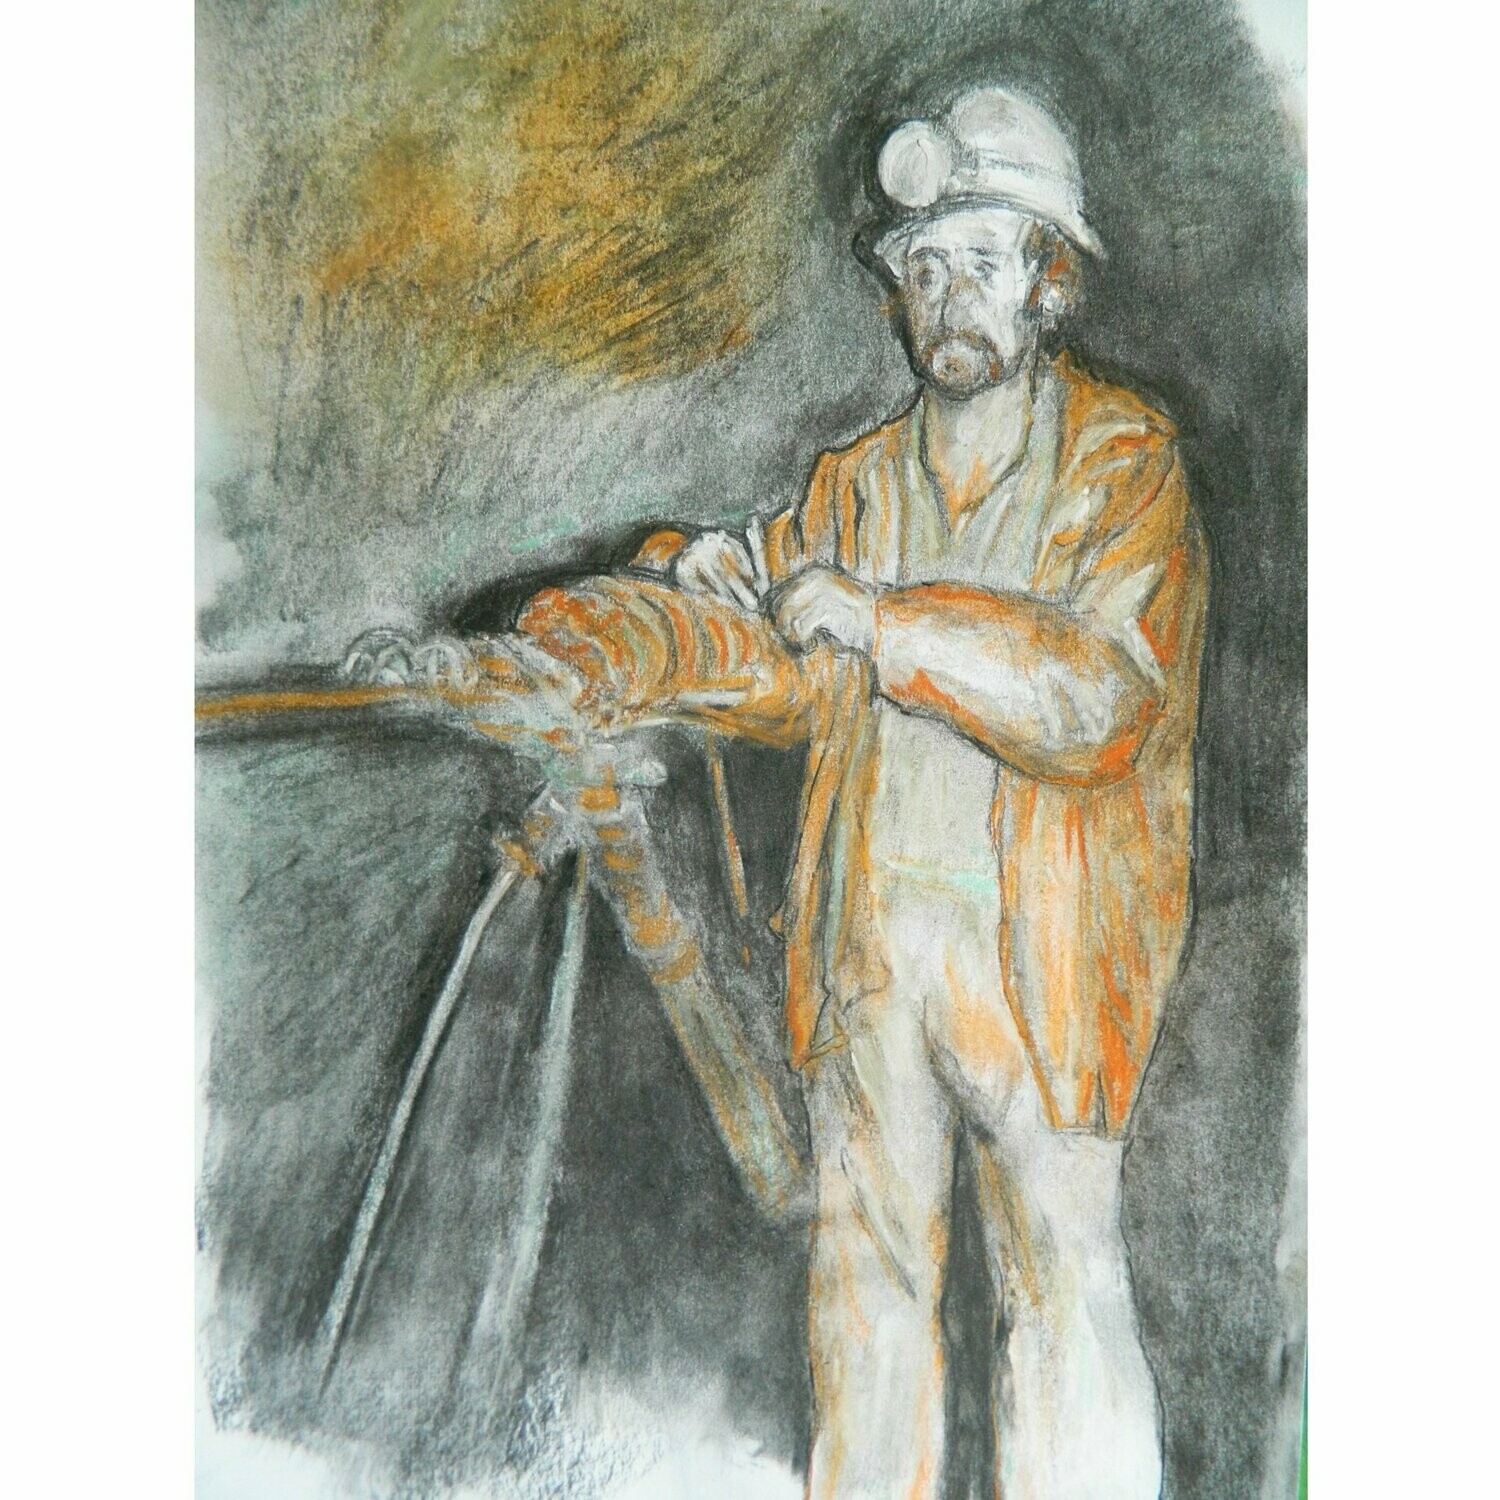 The Tungsten miner, Carrock